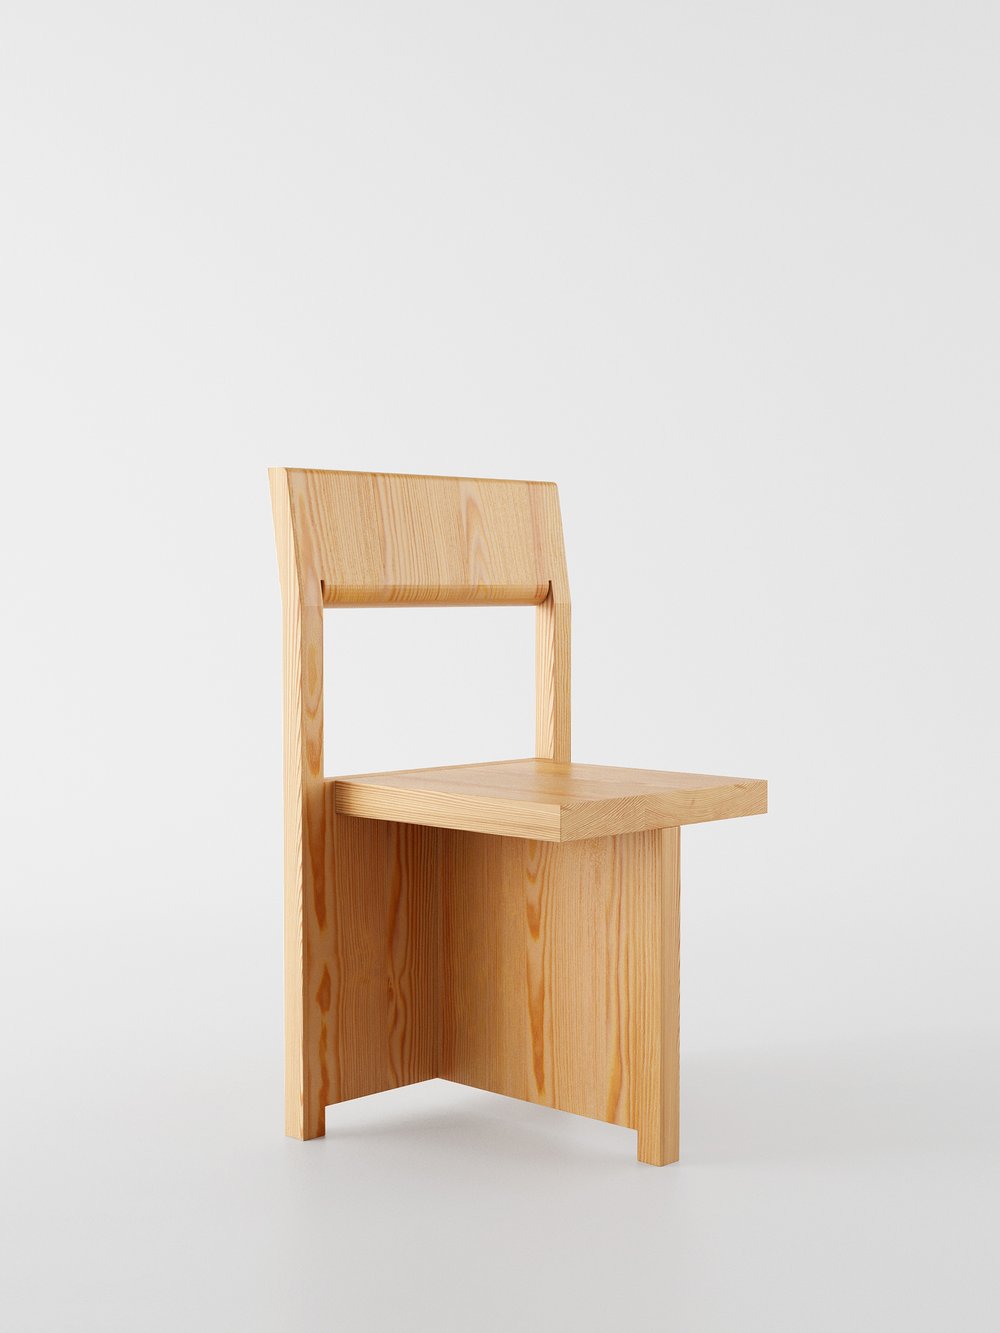 Plank chair Jangir Maddadi Design Bureau 01.jpg